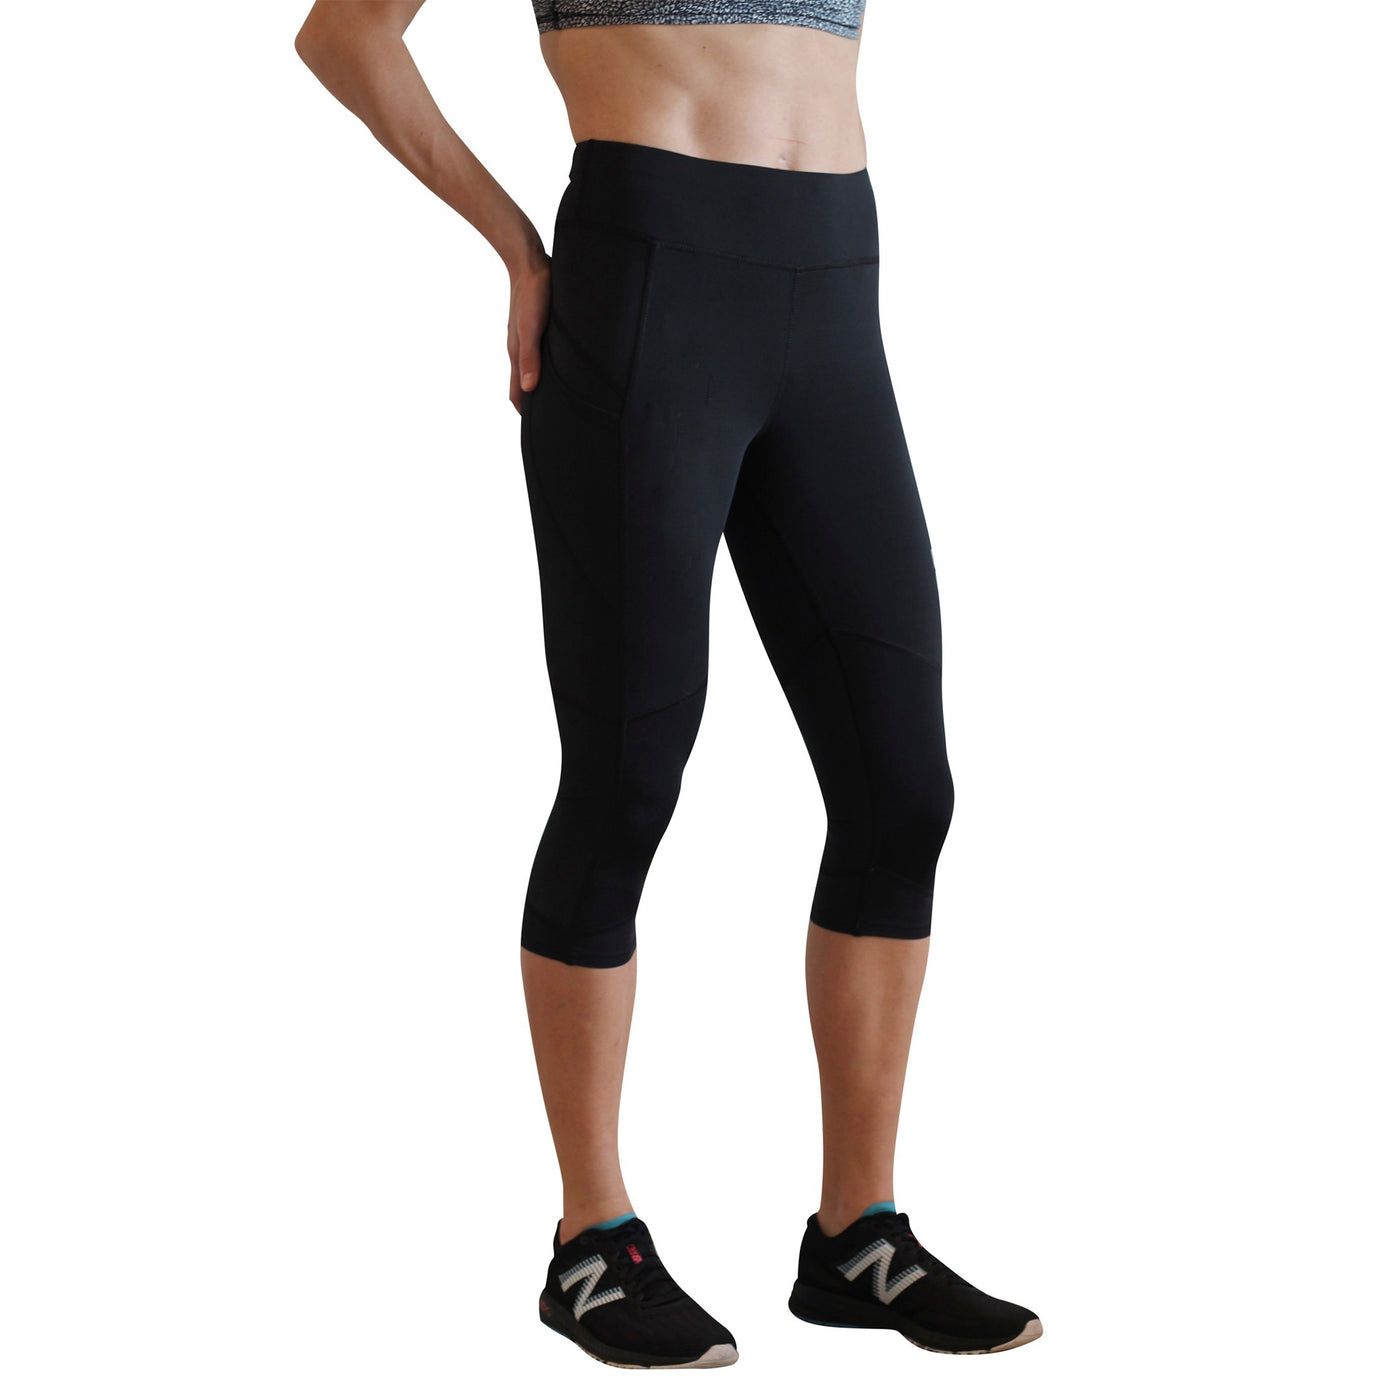 Women’s Patagonia Athletic Leggings, Black, size XL.